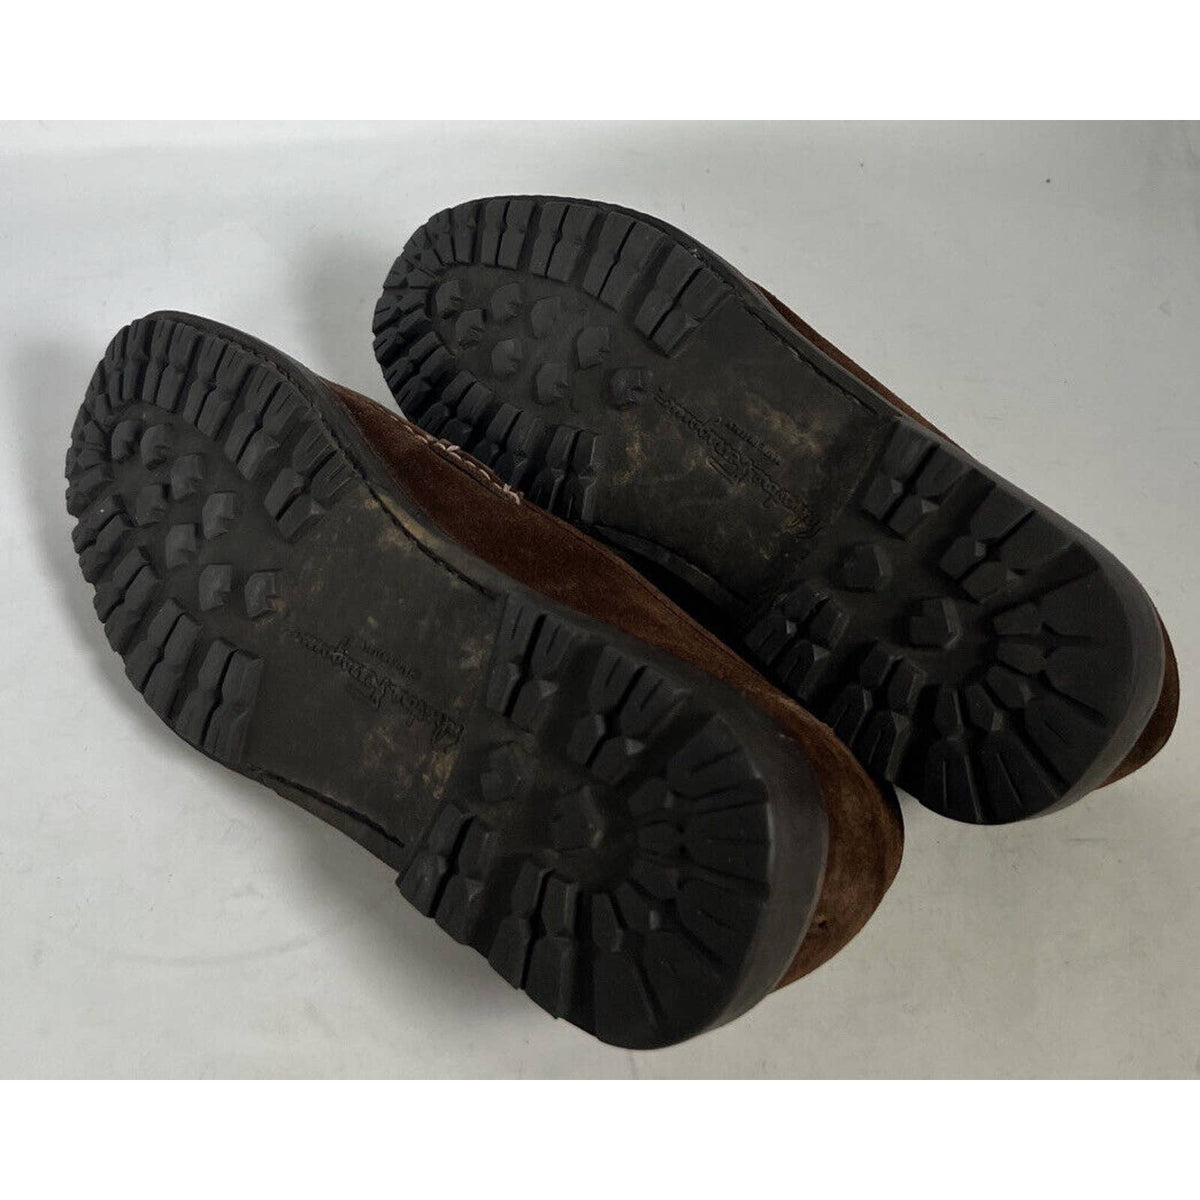 Salvatore Ferragamo Brown Suede Leather Driver Loafers Sz.8 D